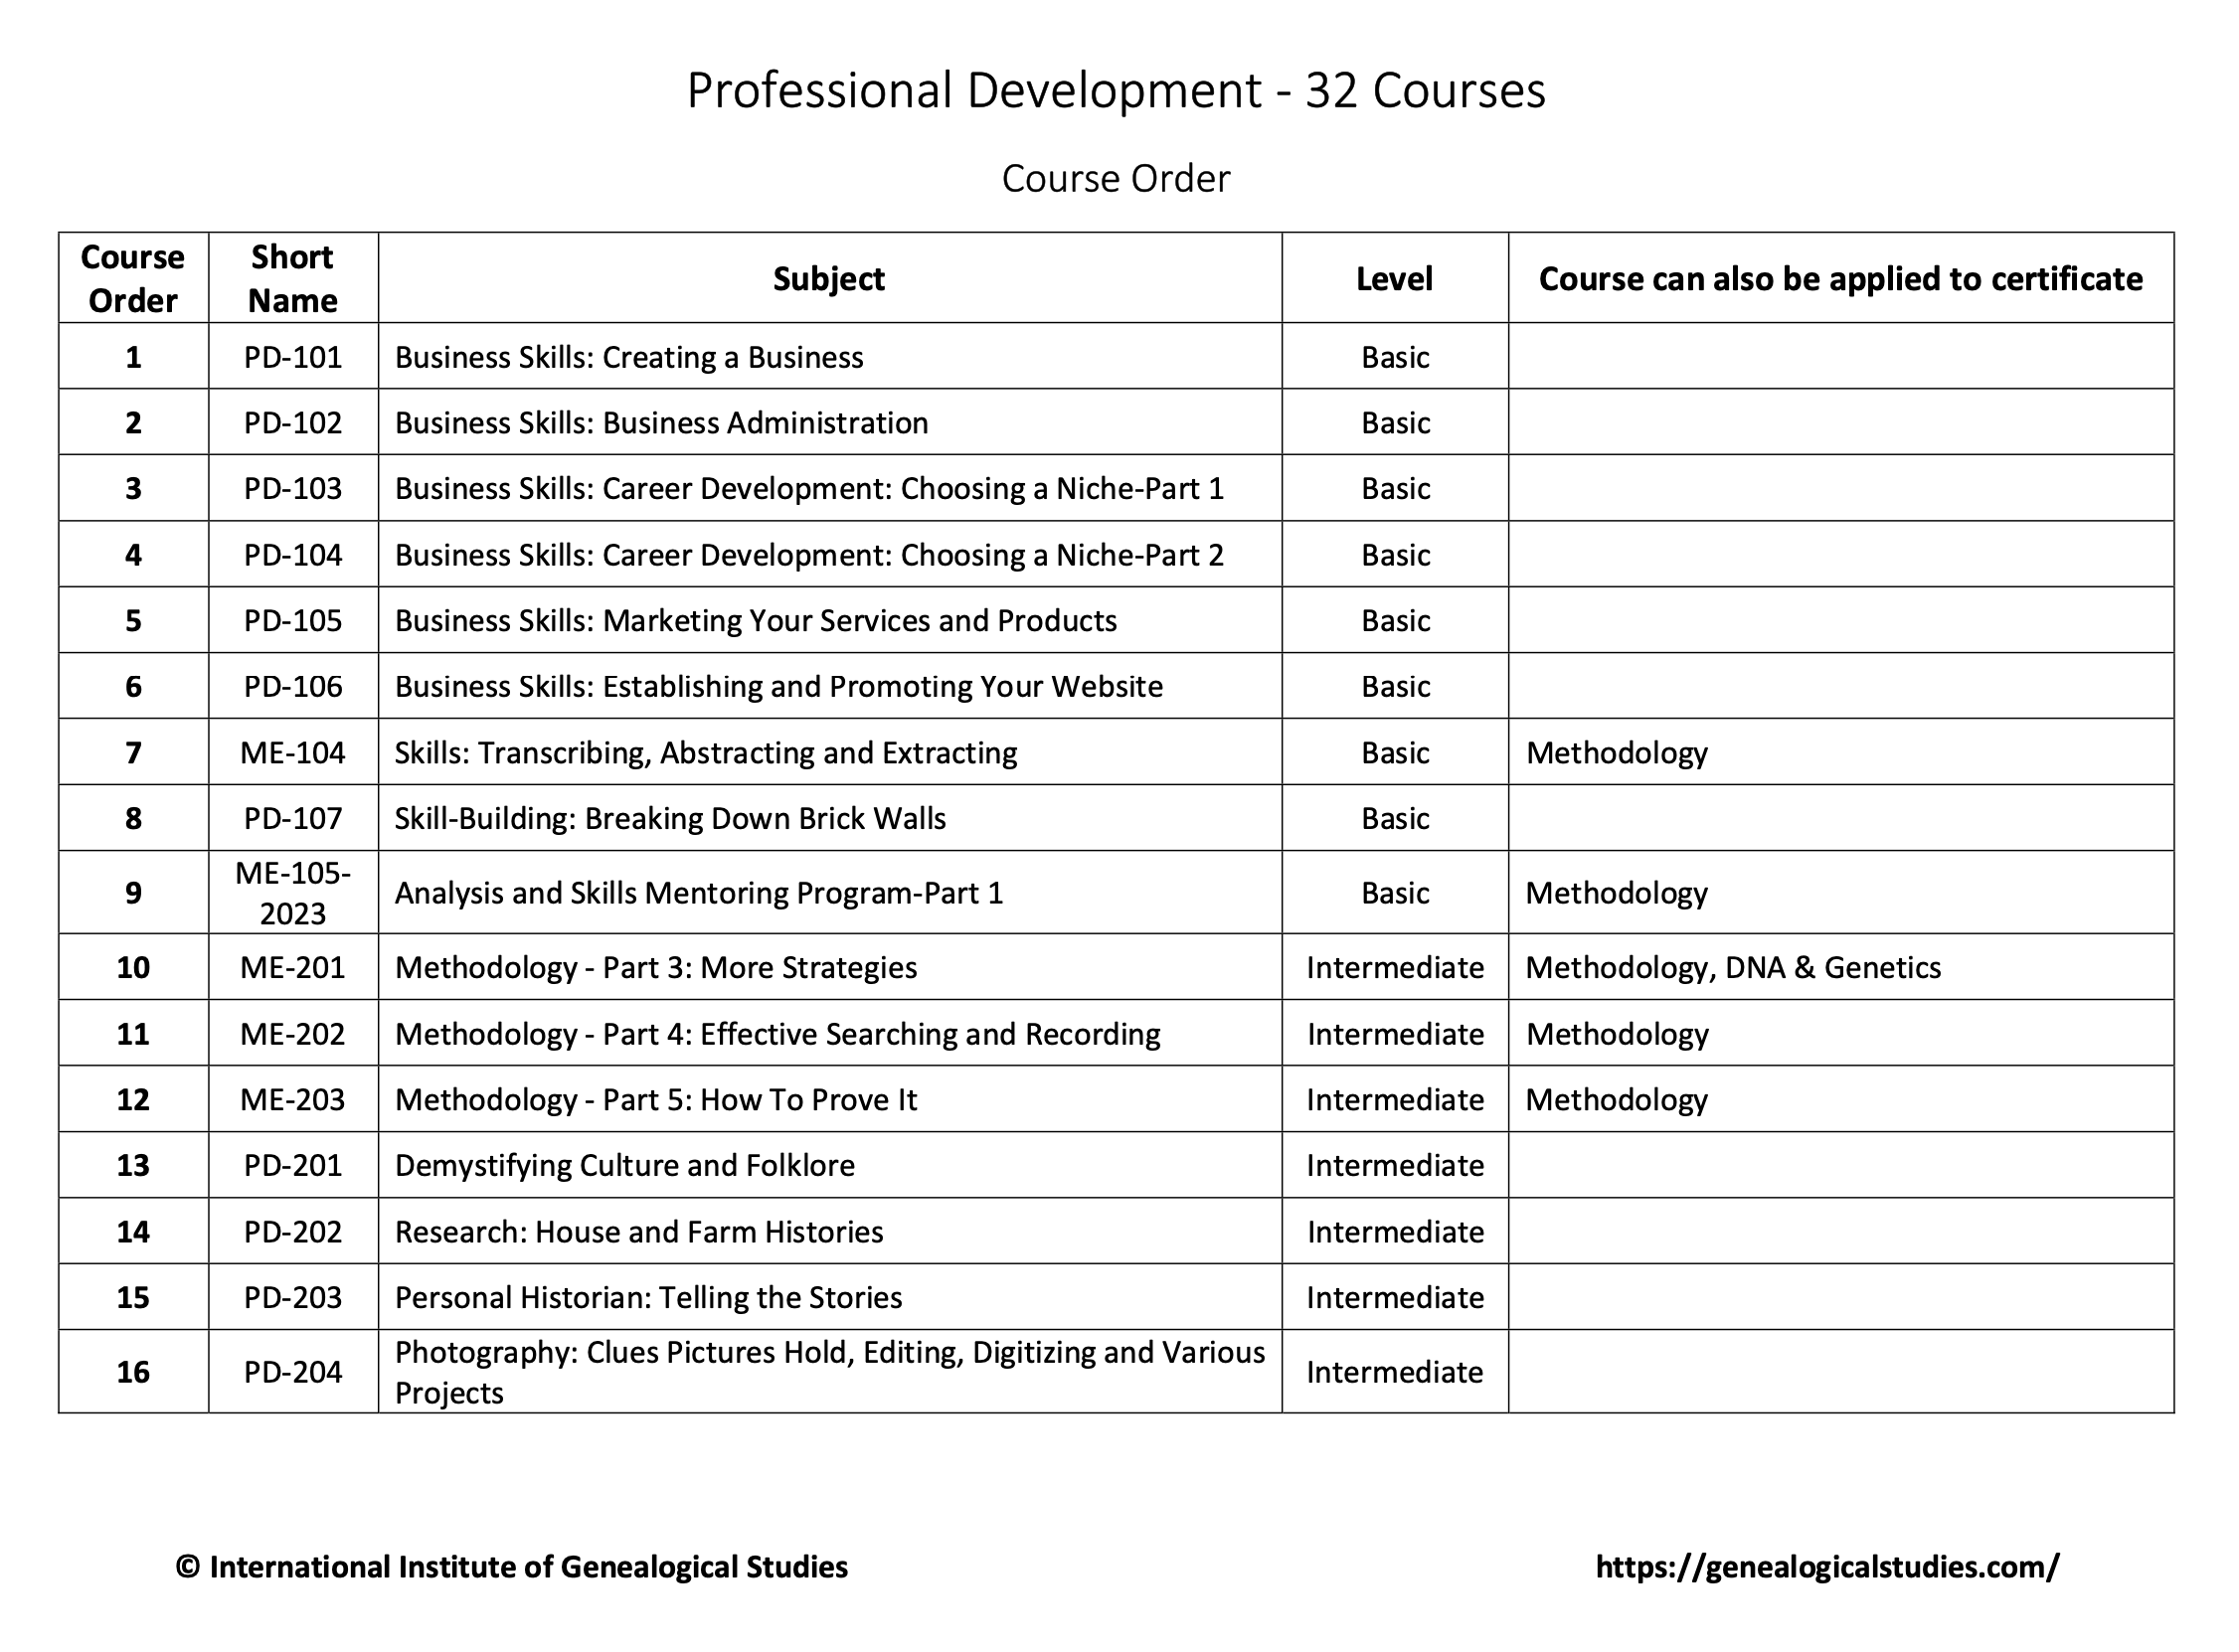 Professional Development course order 1